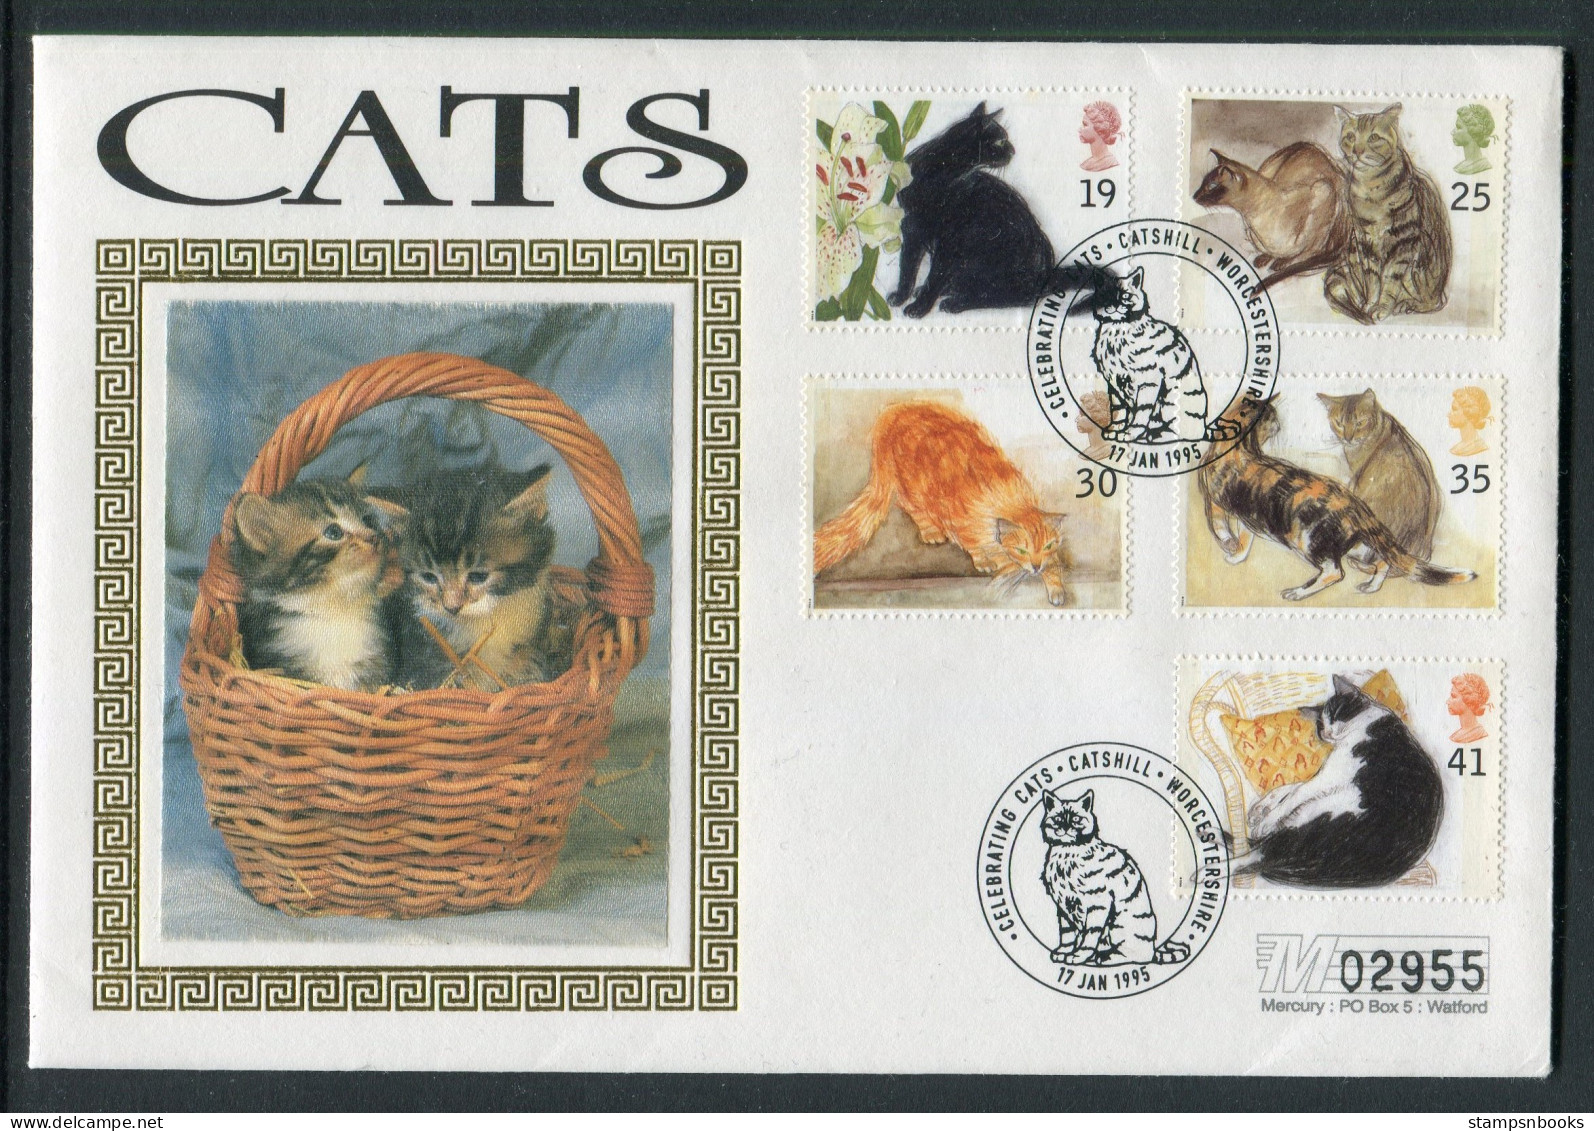 1995 GB Cats First Day Cover, Catshill Worcestershire FDC - 1991-00 Ediciones Decimales